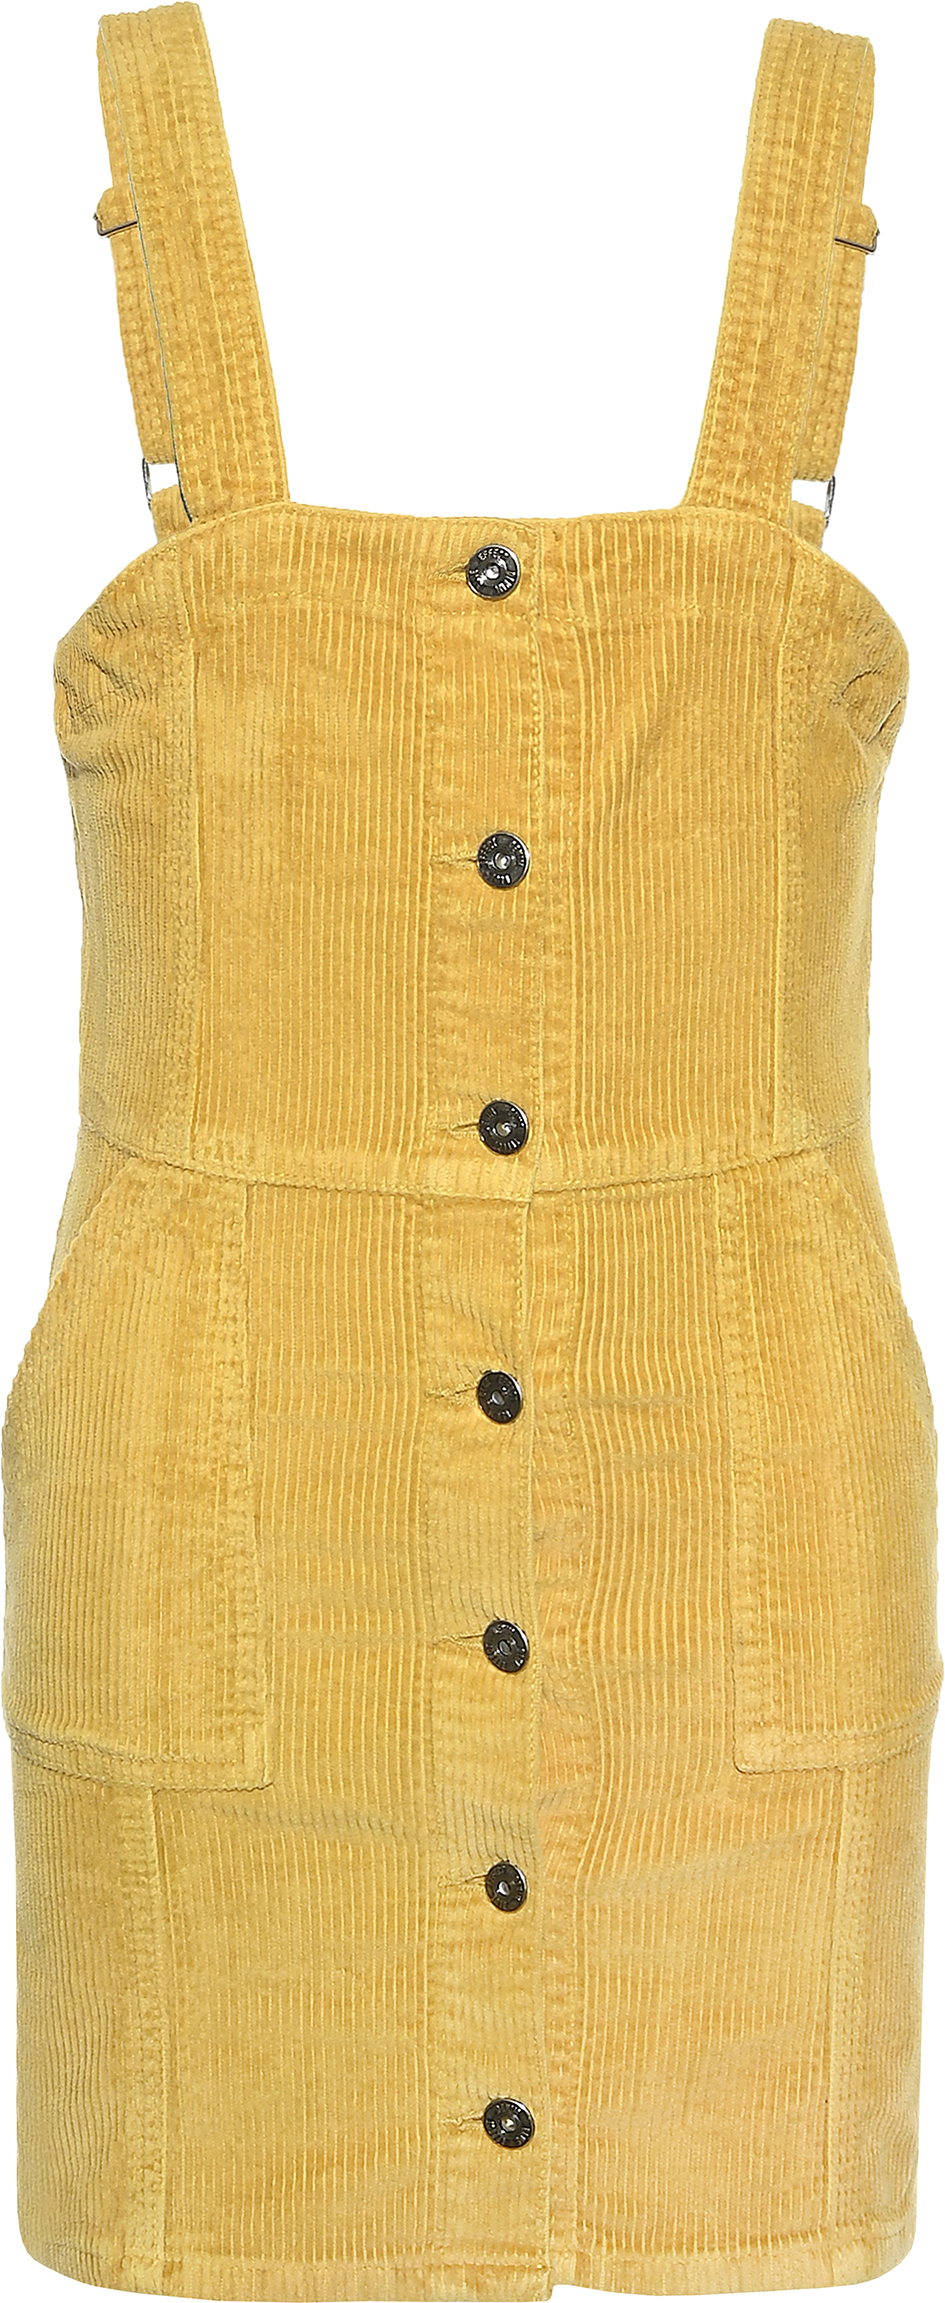 3268-Girls Overall Skirt Corduroy